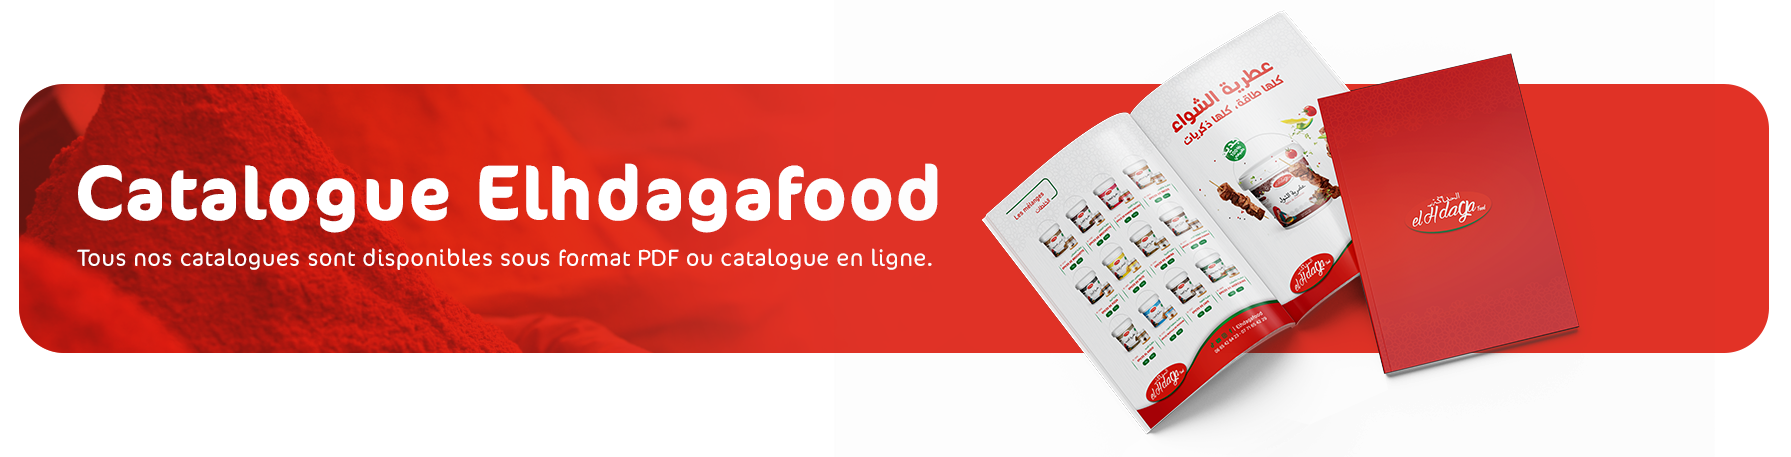 Elhdagafood-catalogue